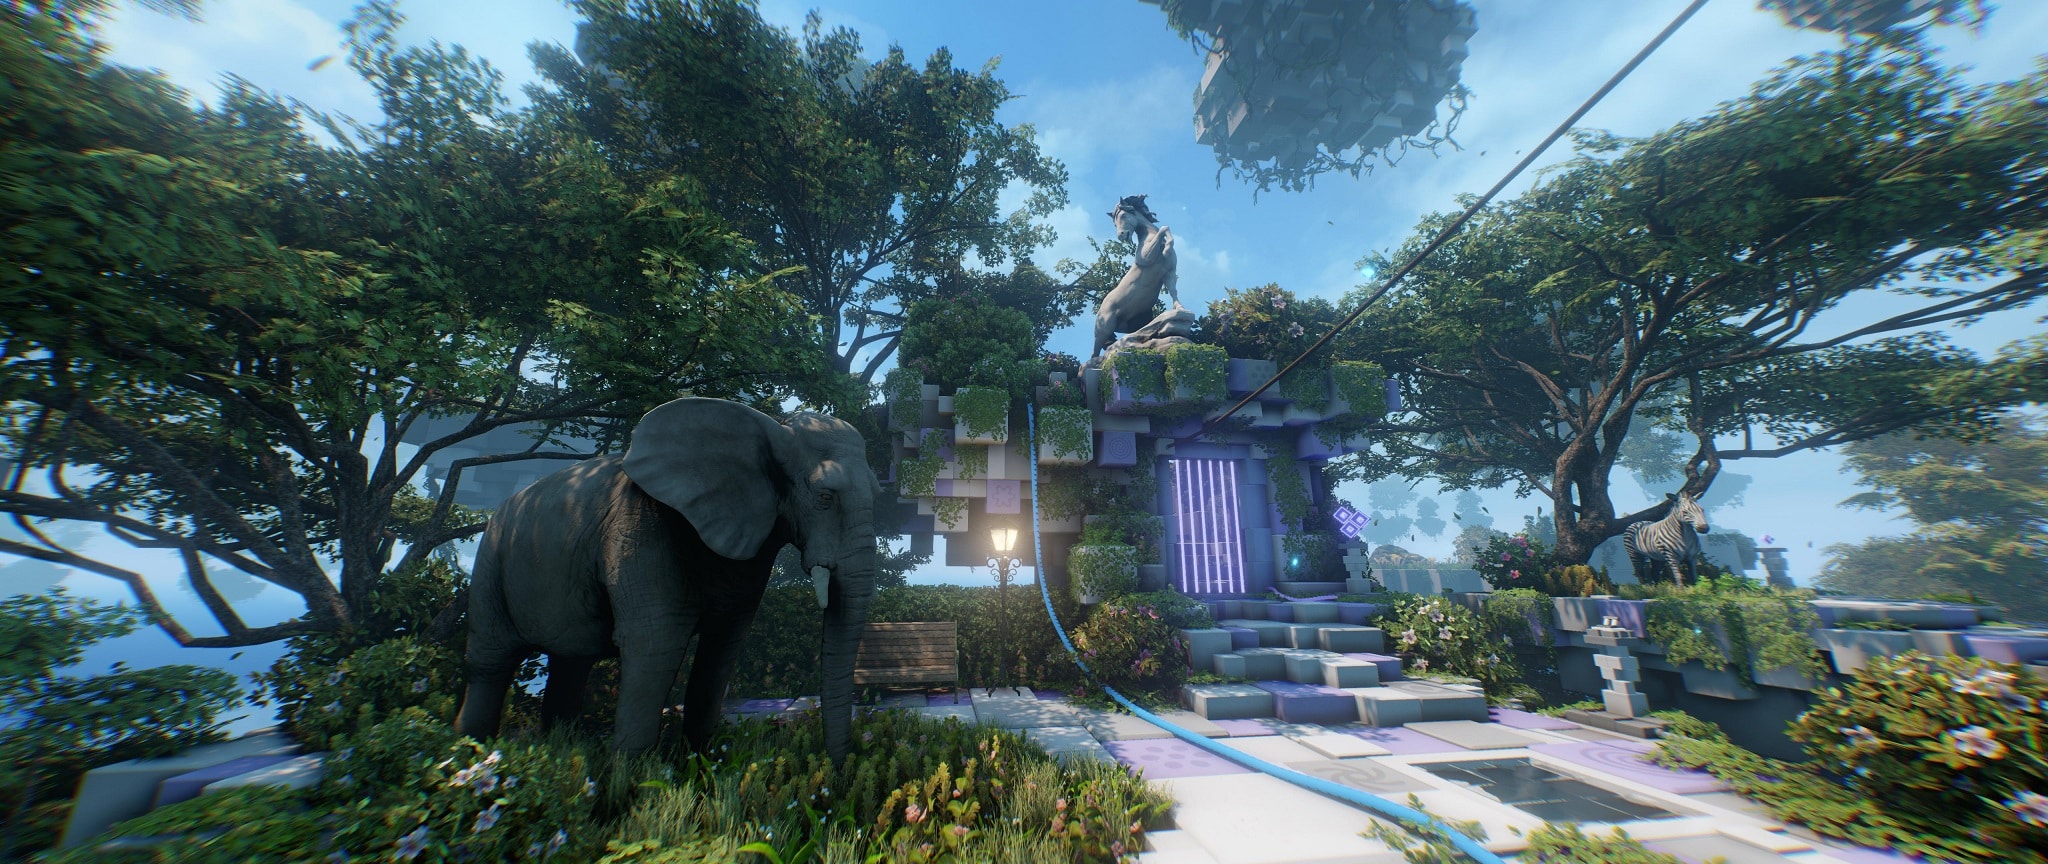 Jungle quest virtual reality screenshot 6 sml